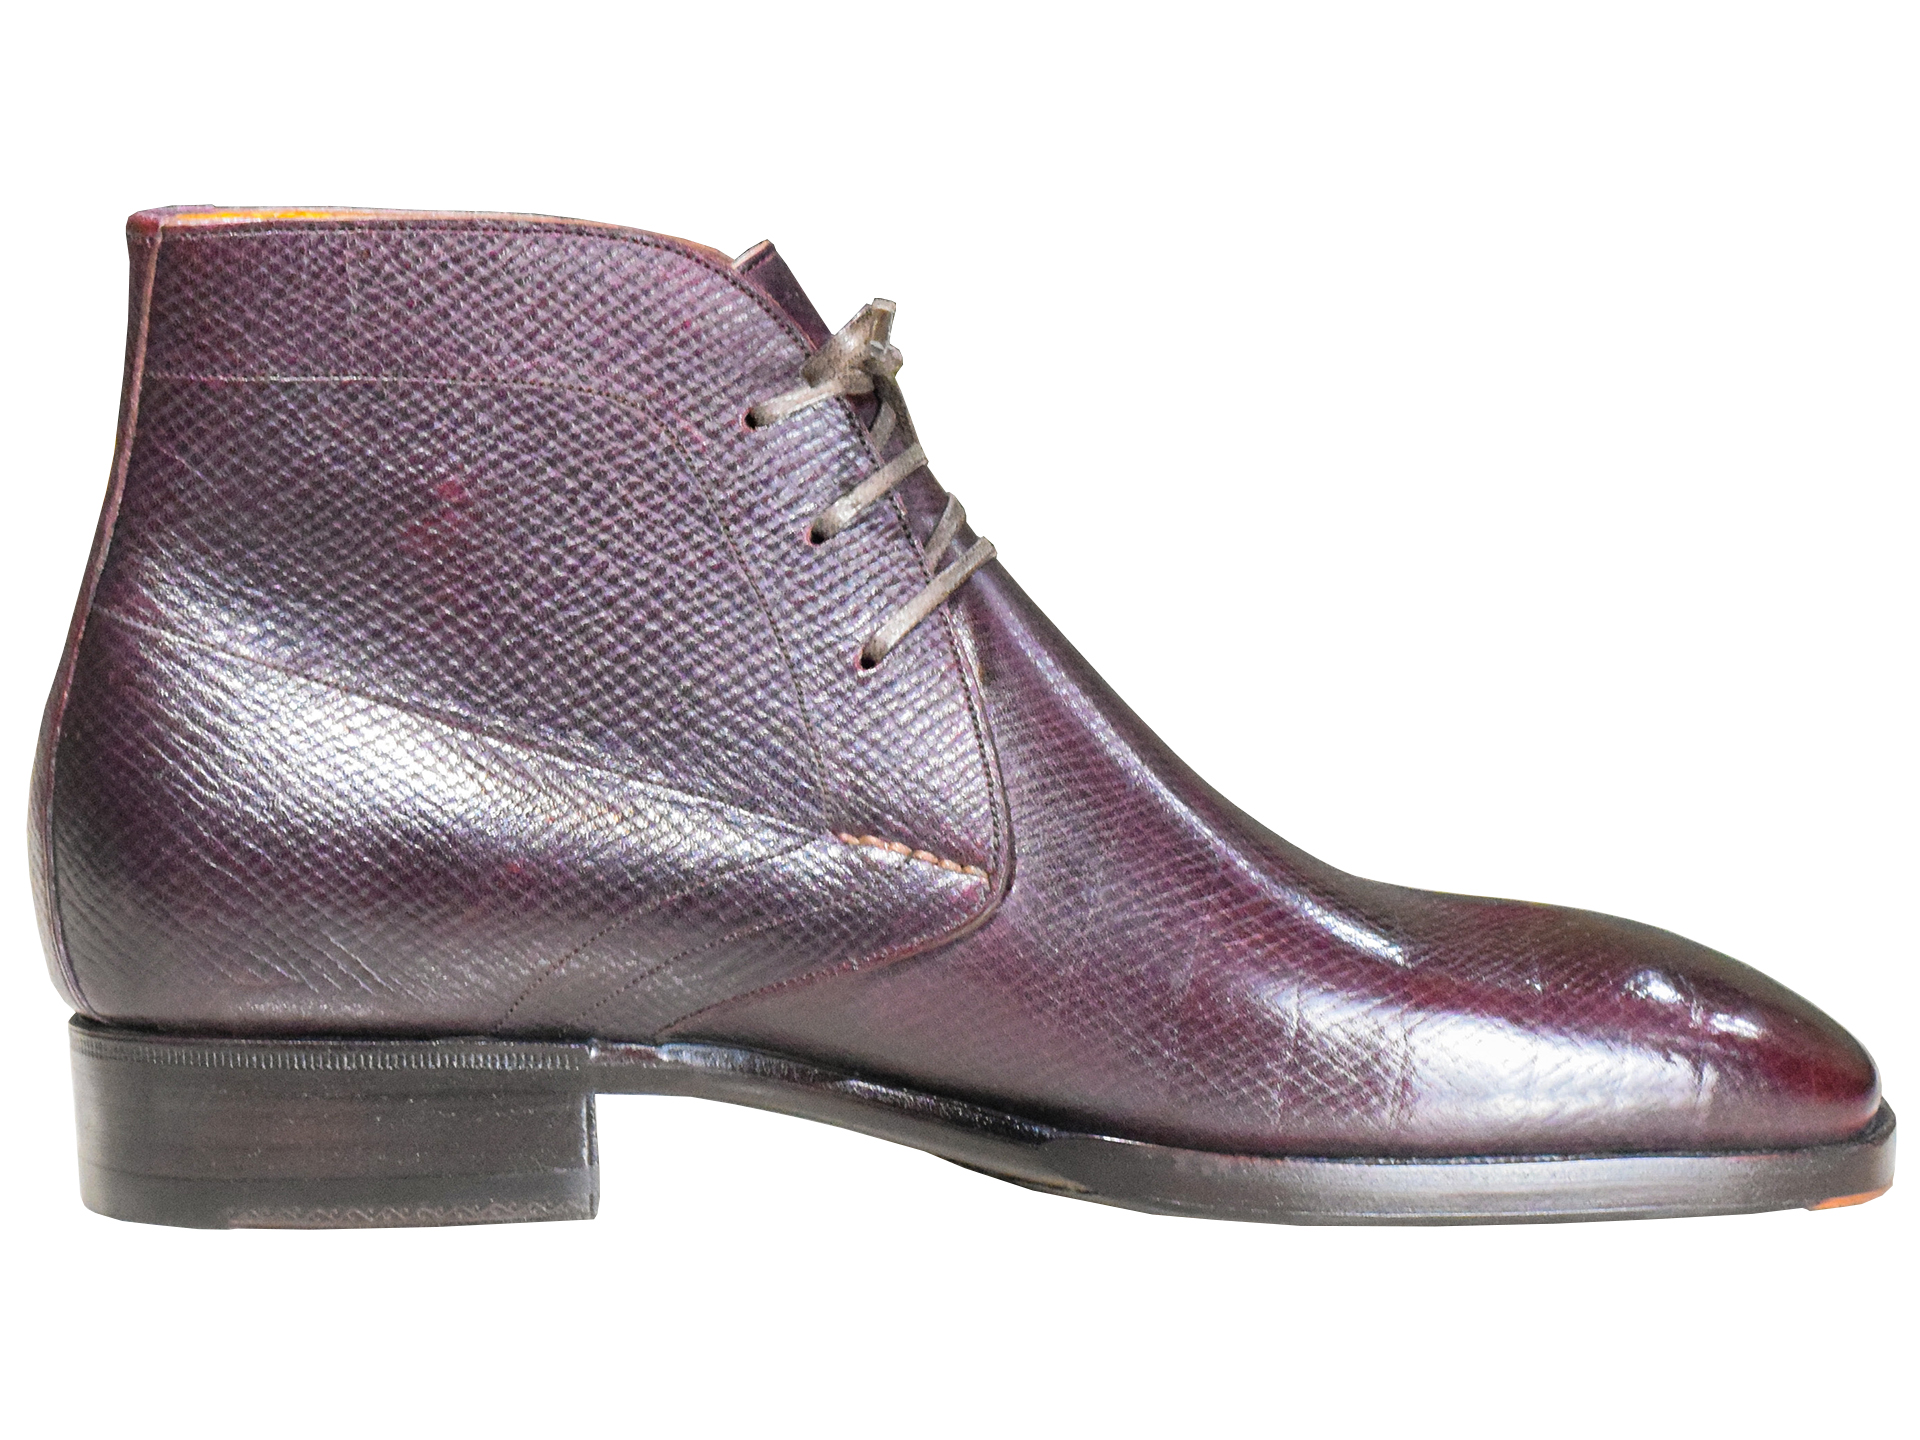 MTO Chukka Boots hatchgrain leather - Premium line